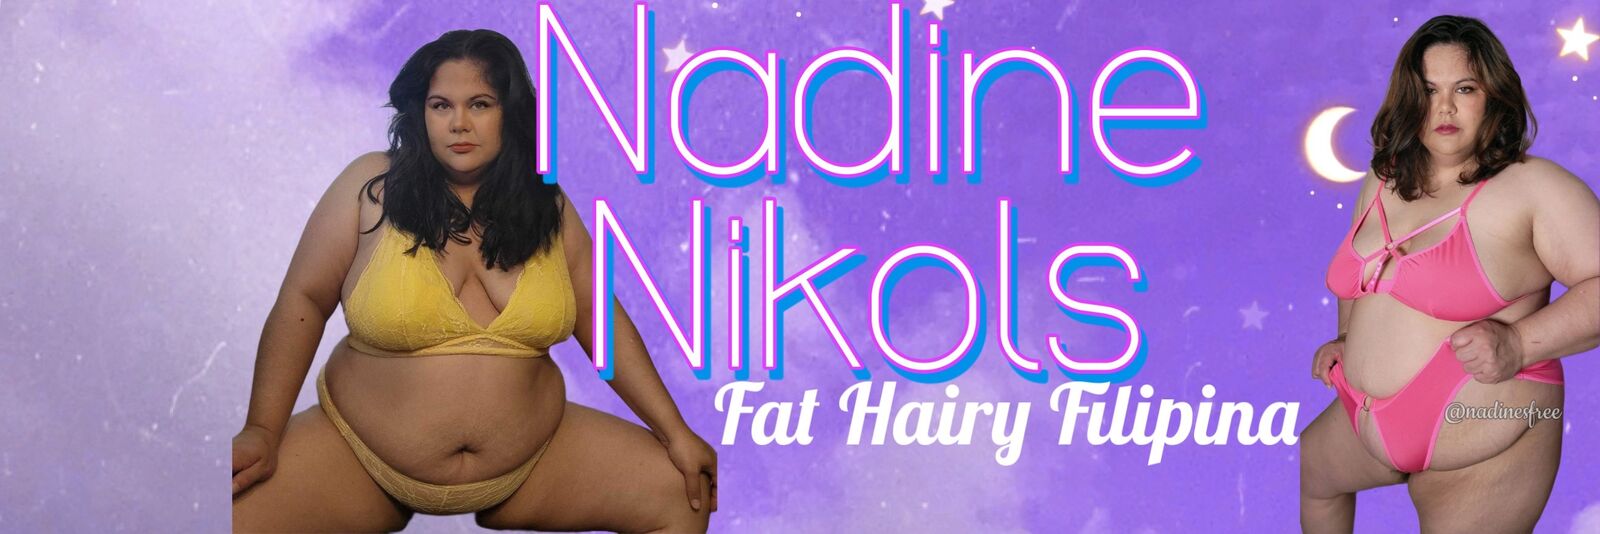 See Nadine Nikols BBW Free profile